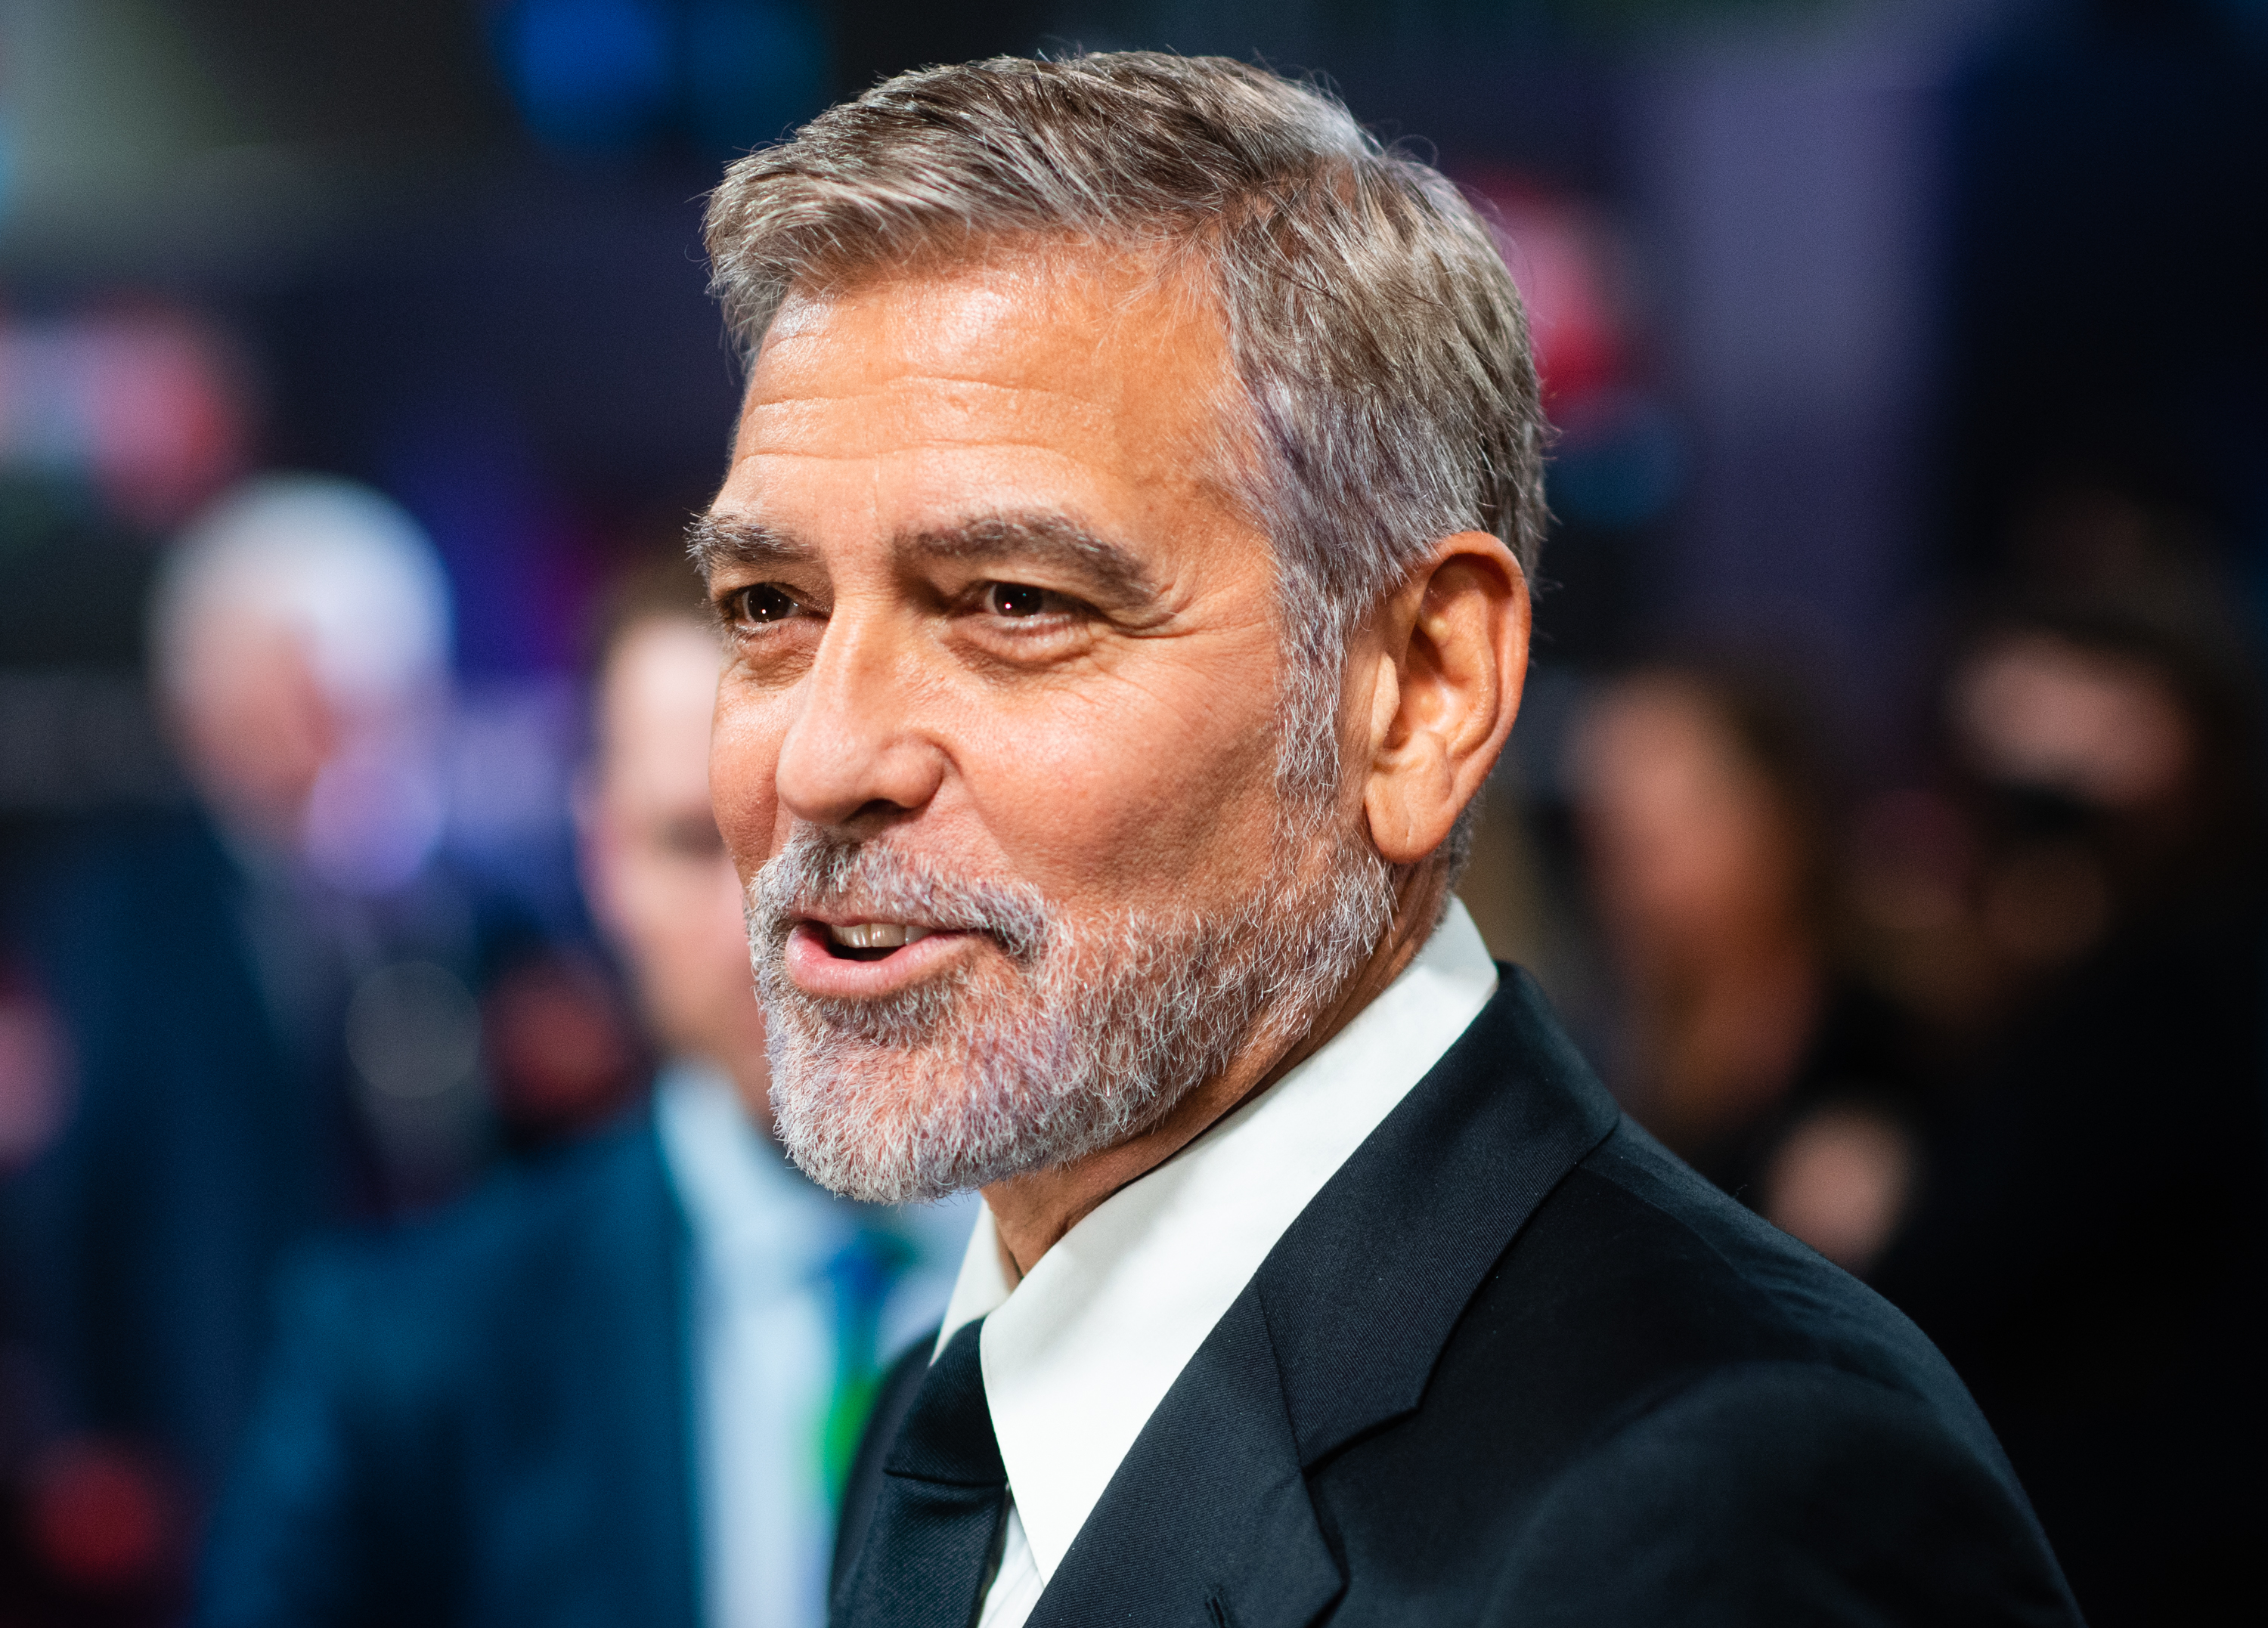 George Clooney Alec Baldwin